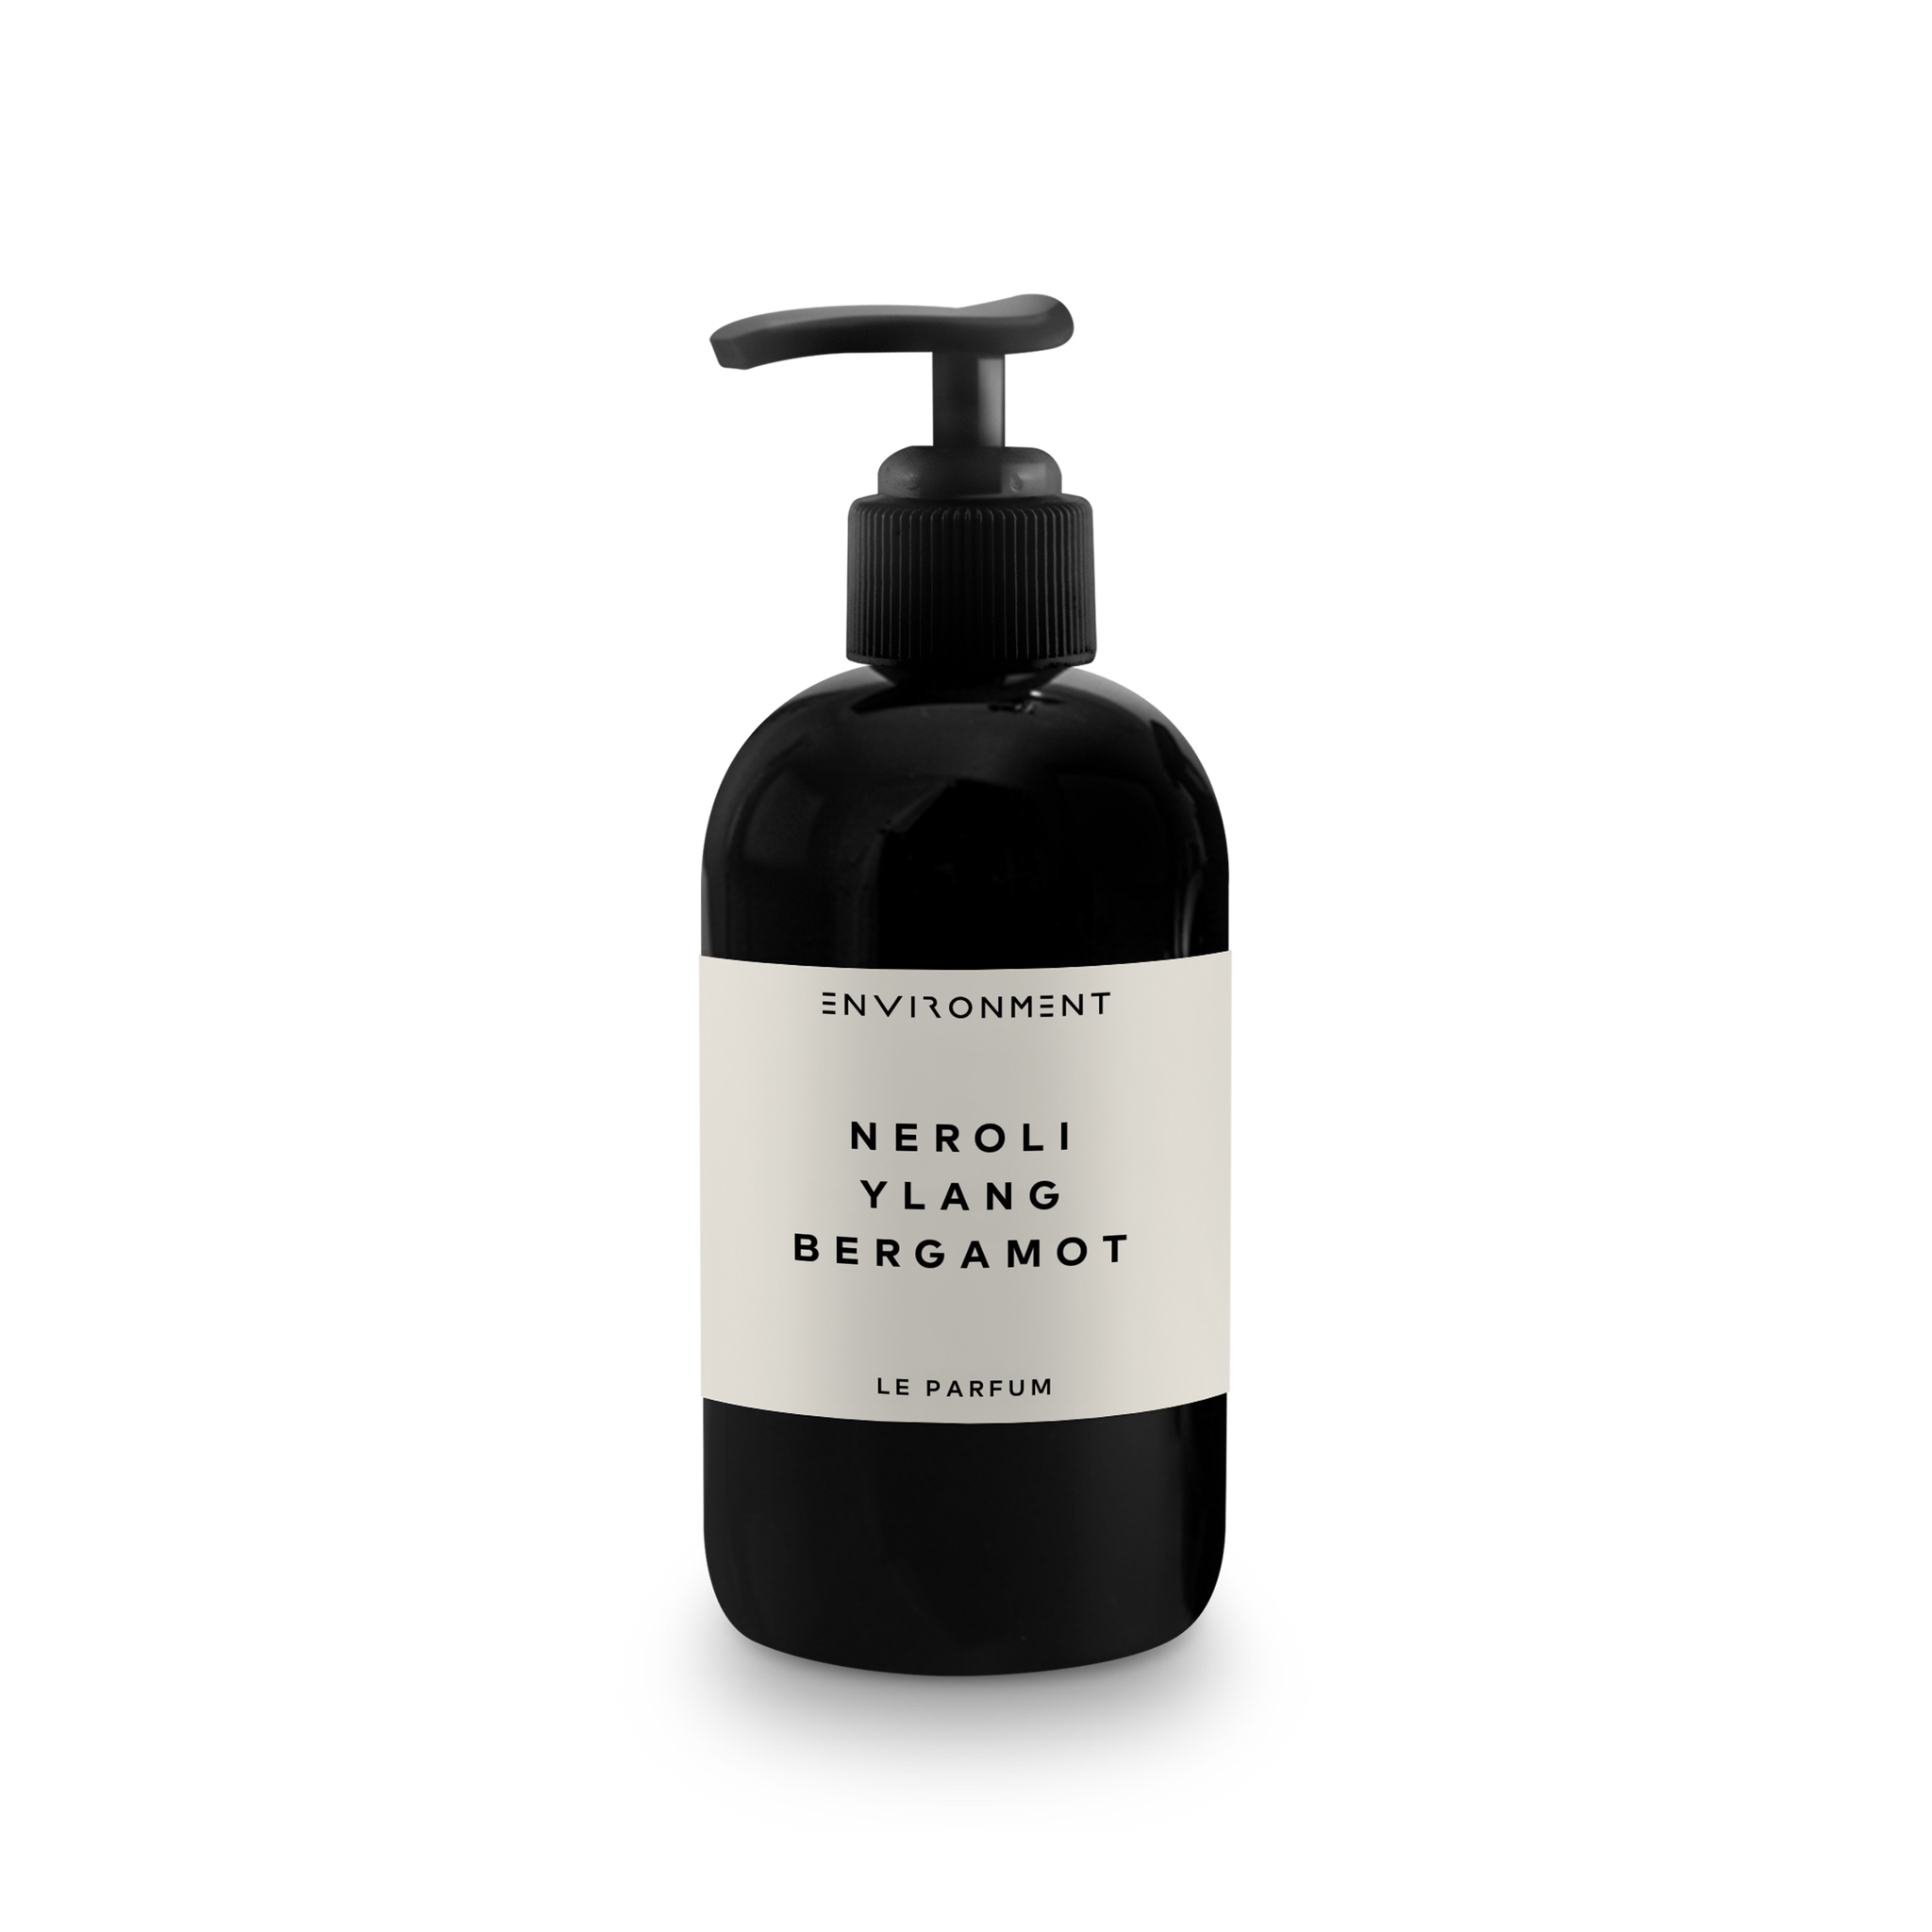 Neroli | Ylang | Bergamot Hand Soap (Inspired by Chanel Chanel #5®)